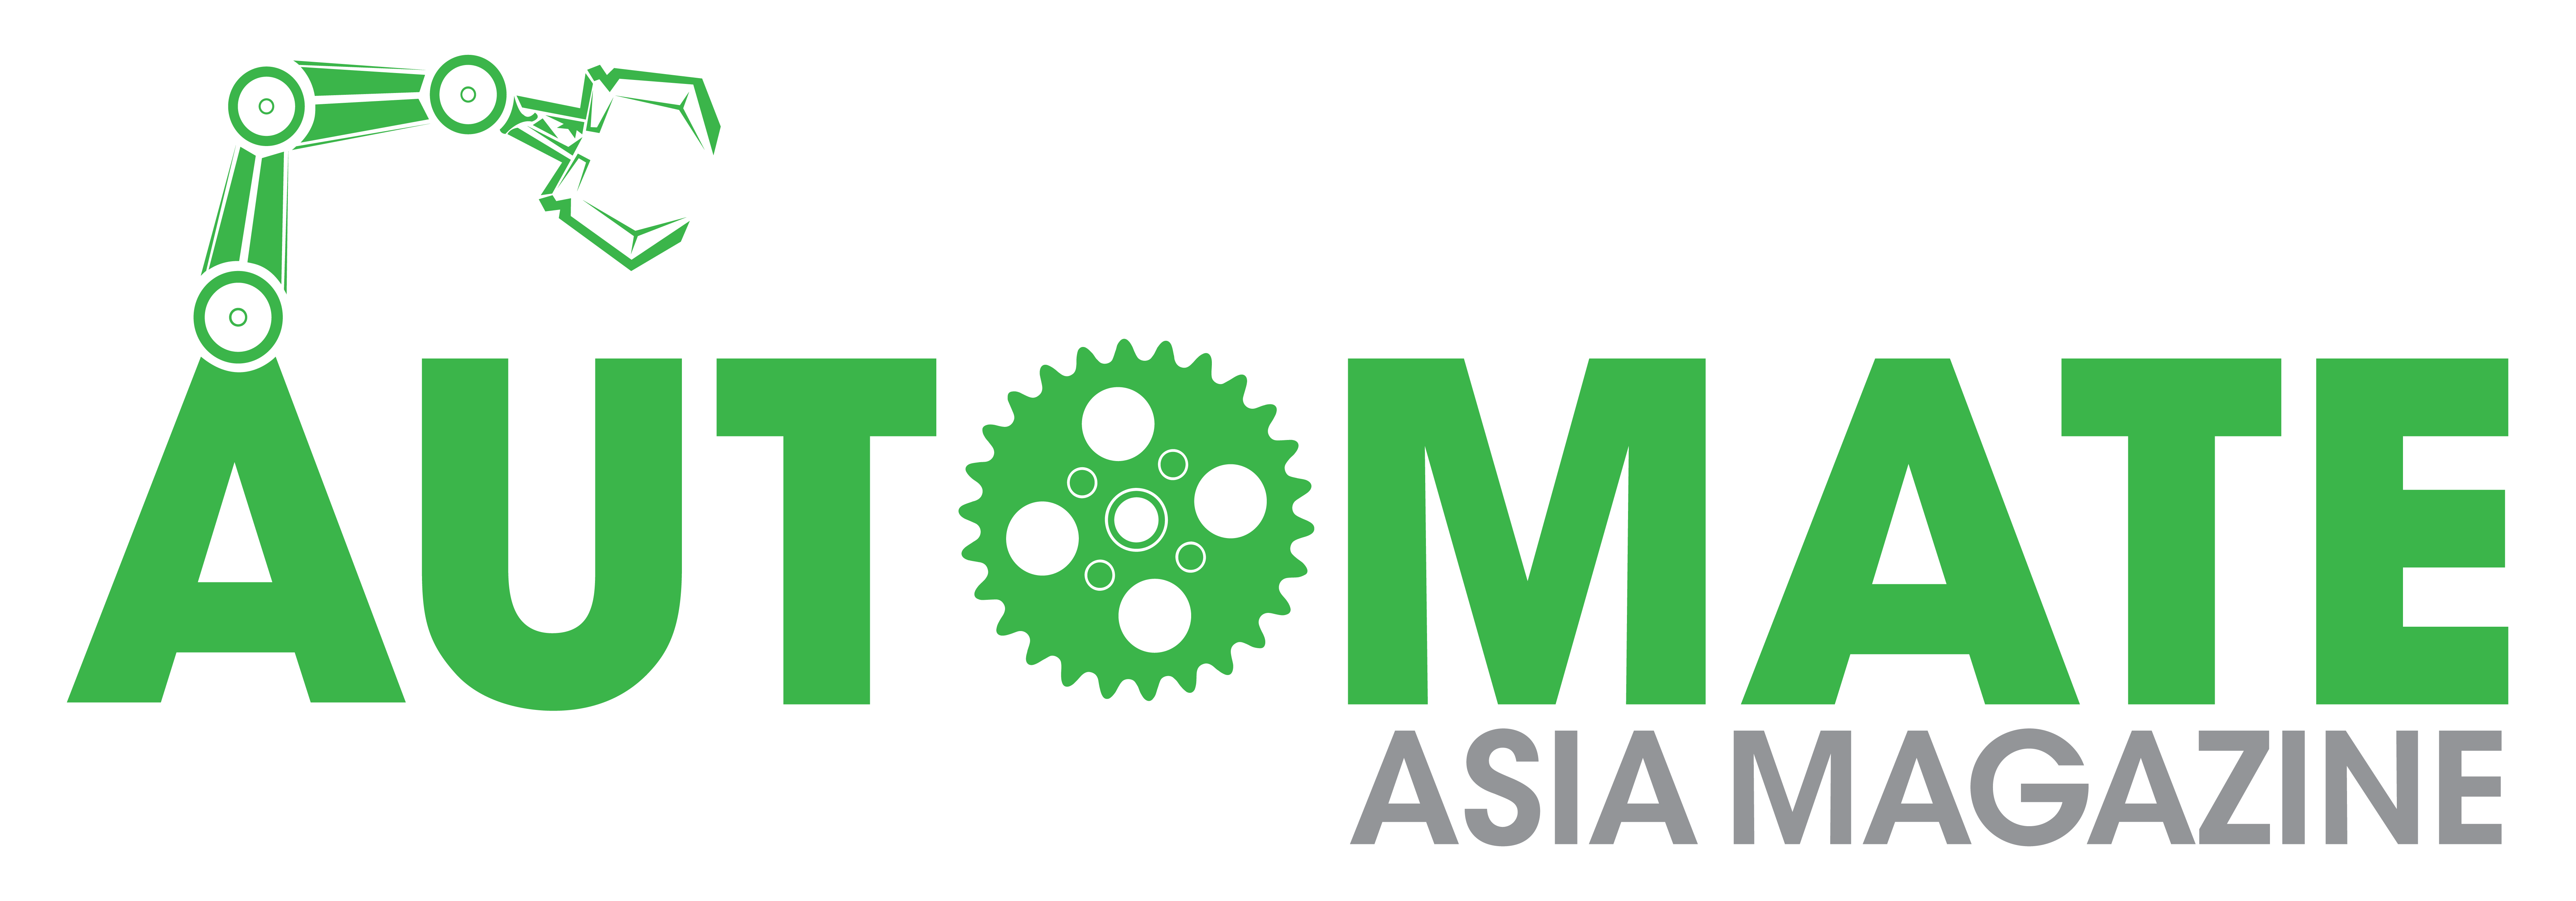 Asia automate Magazine logo_Final-01